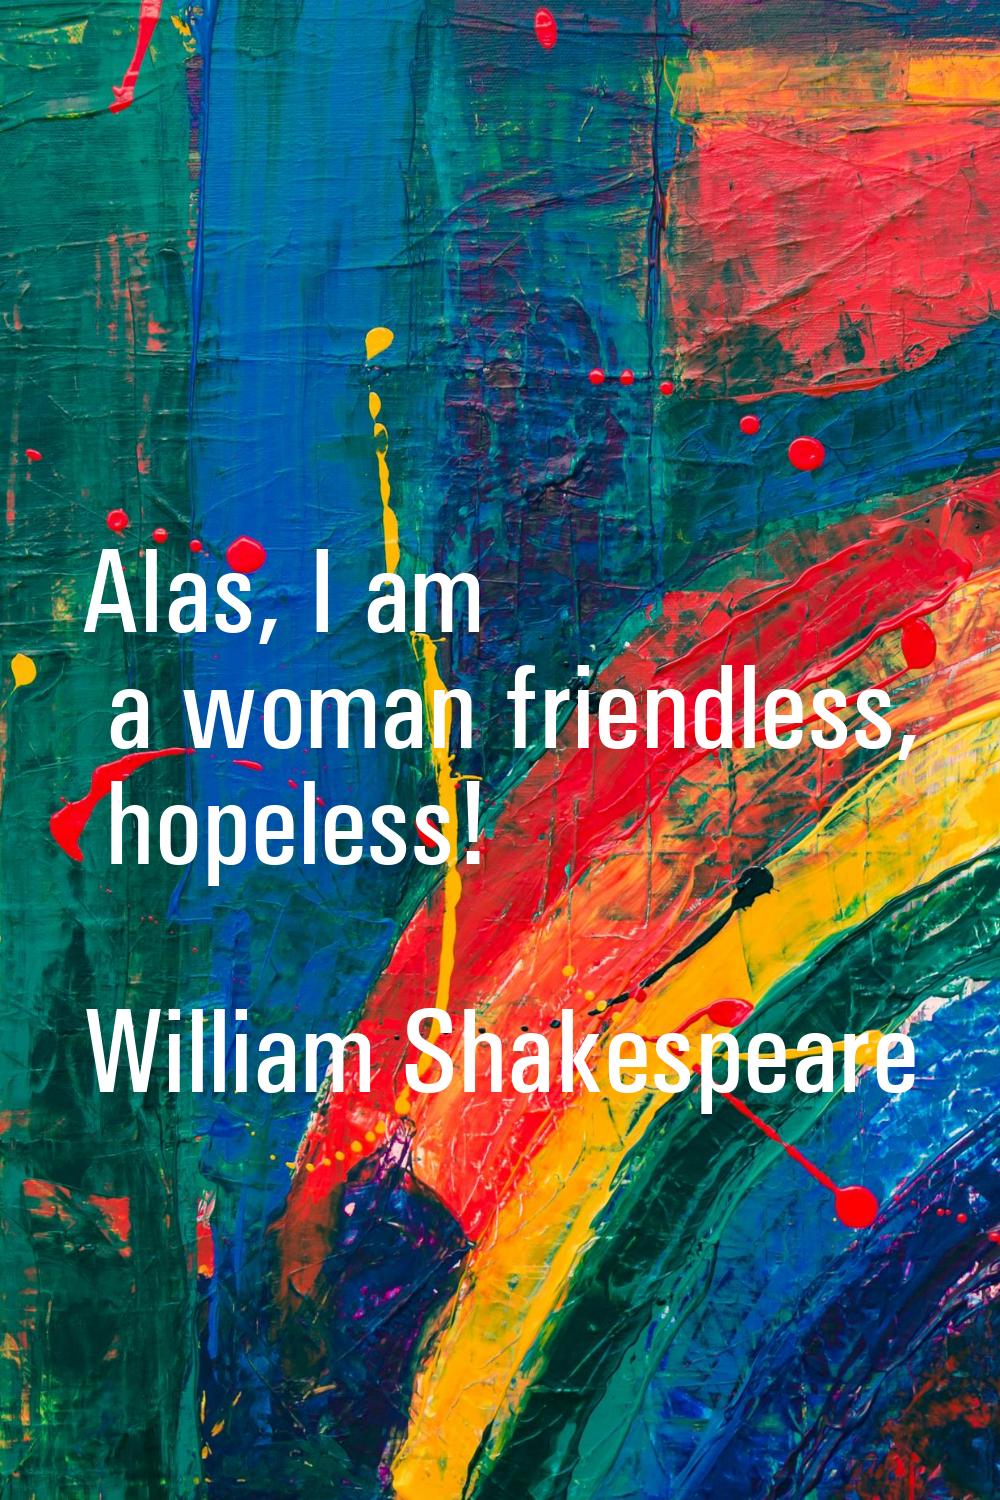 Alas, I am a woman friendless, hopeless!